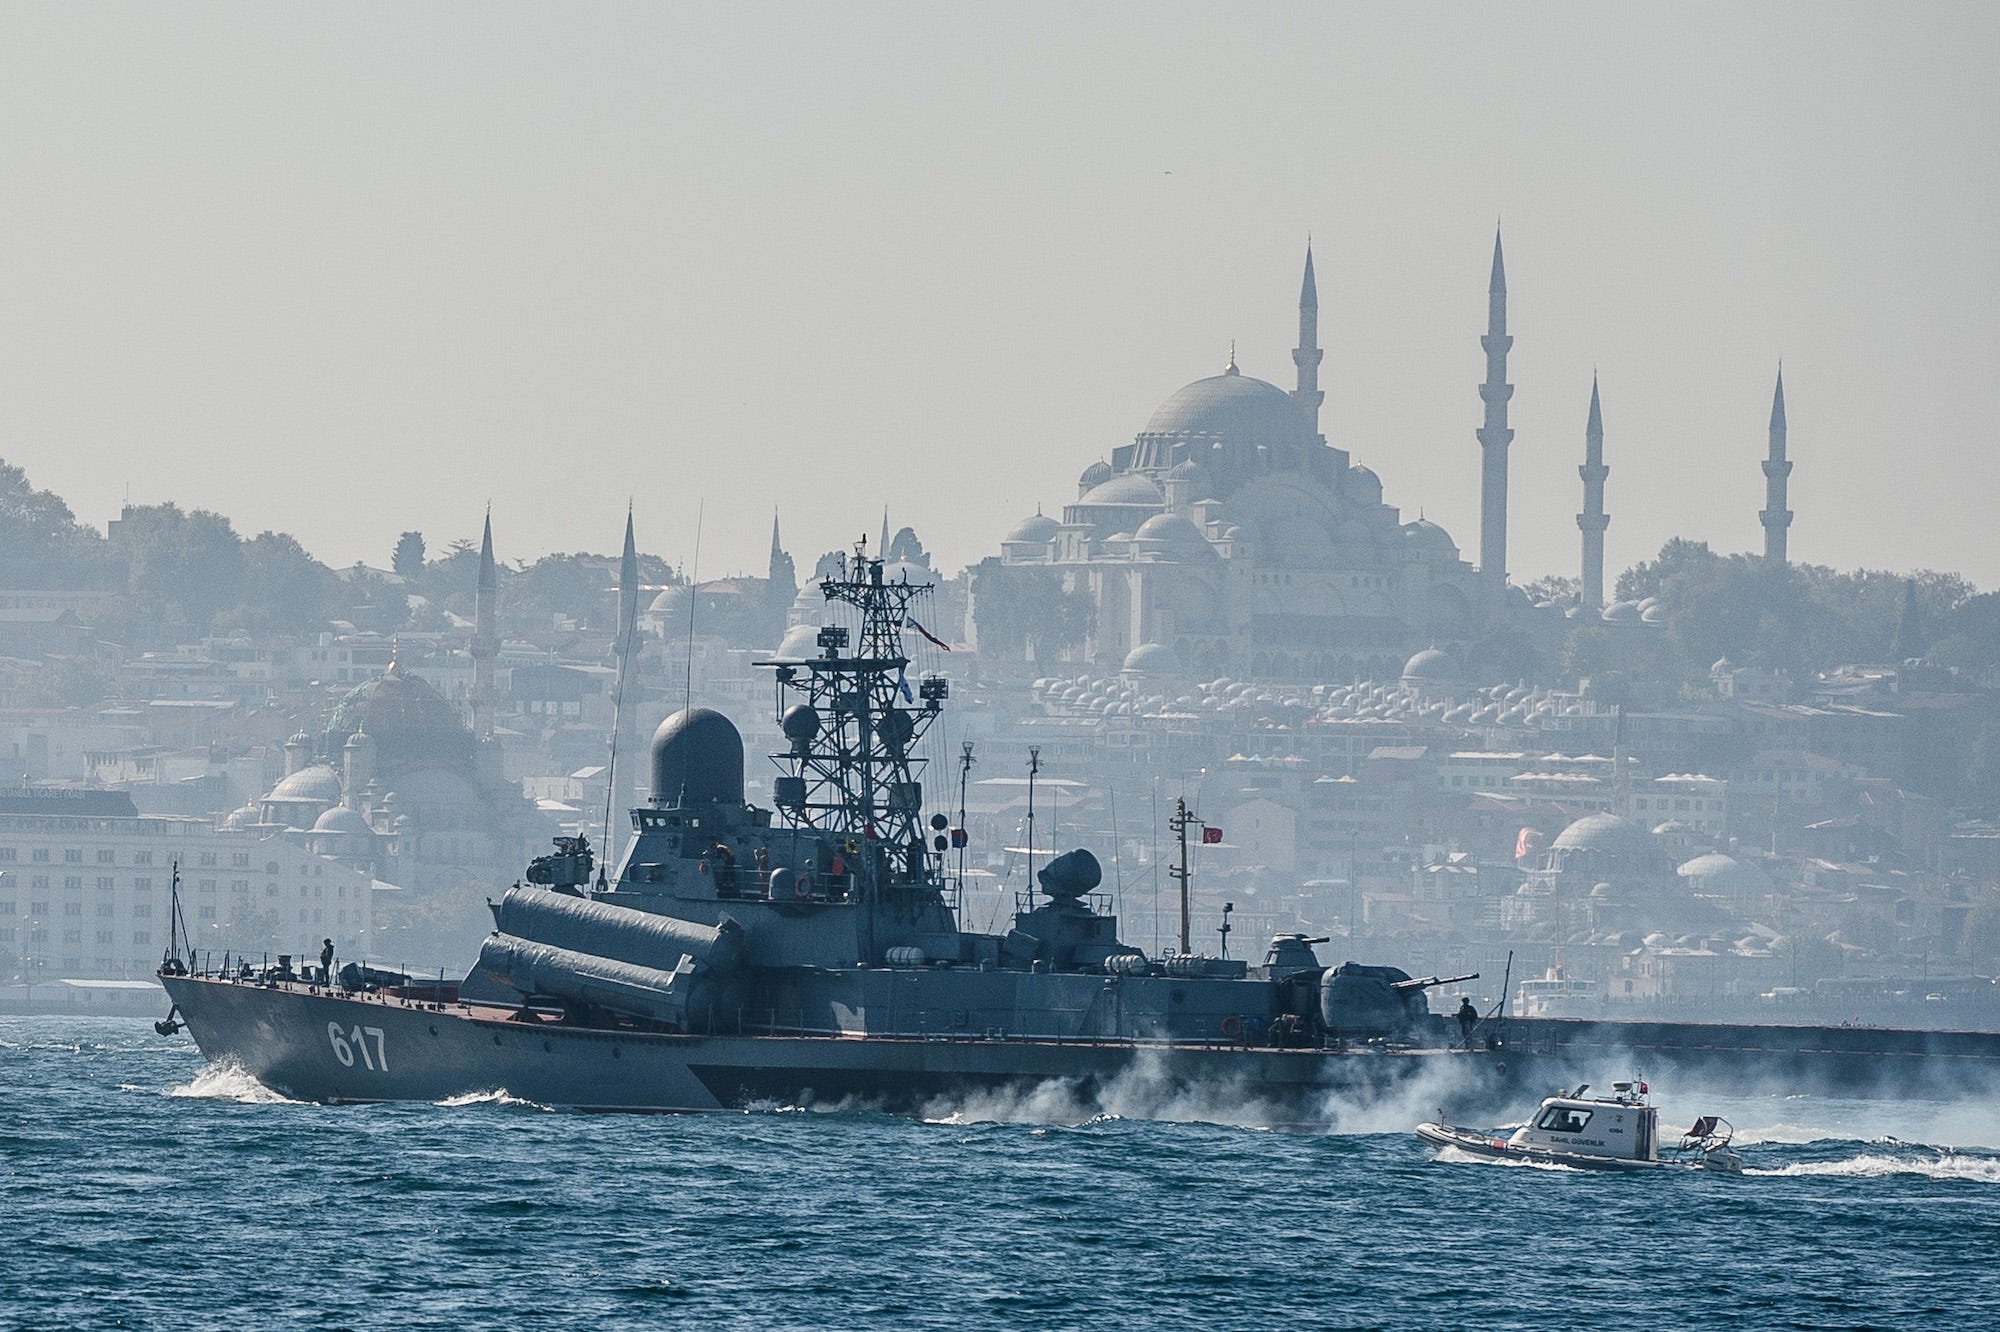 Russian corvette warship Bosphorus Istanbul Turkey